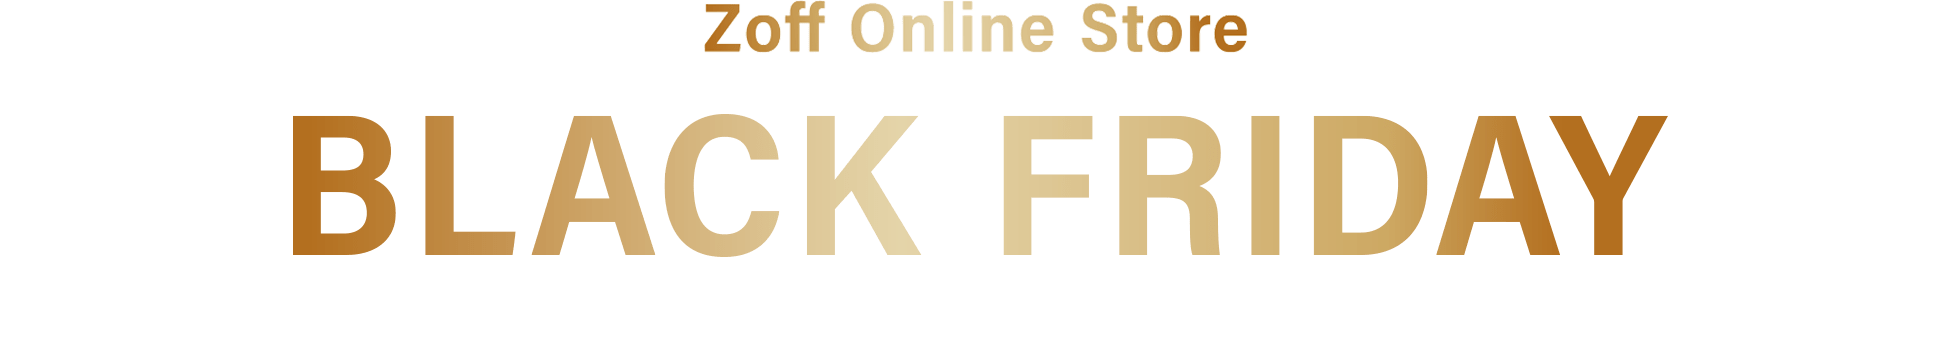 Zoff Online Store BLACK FRIDAY